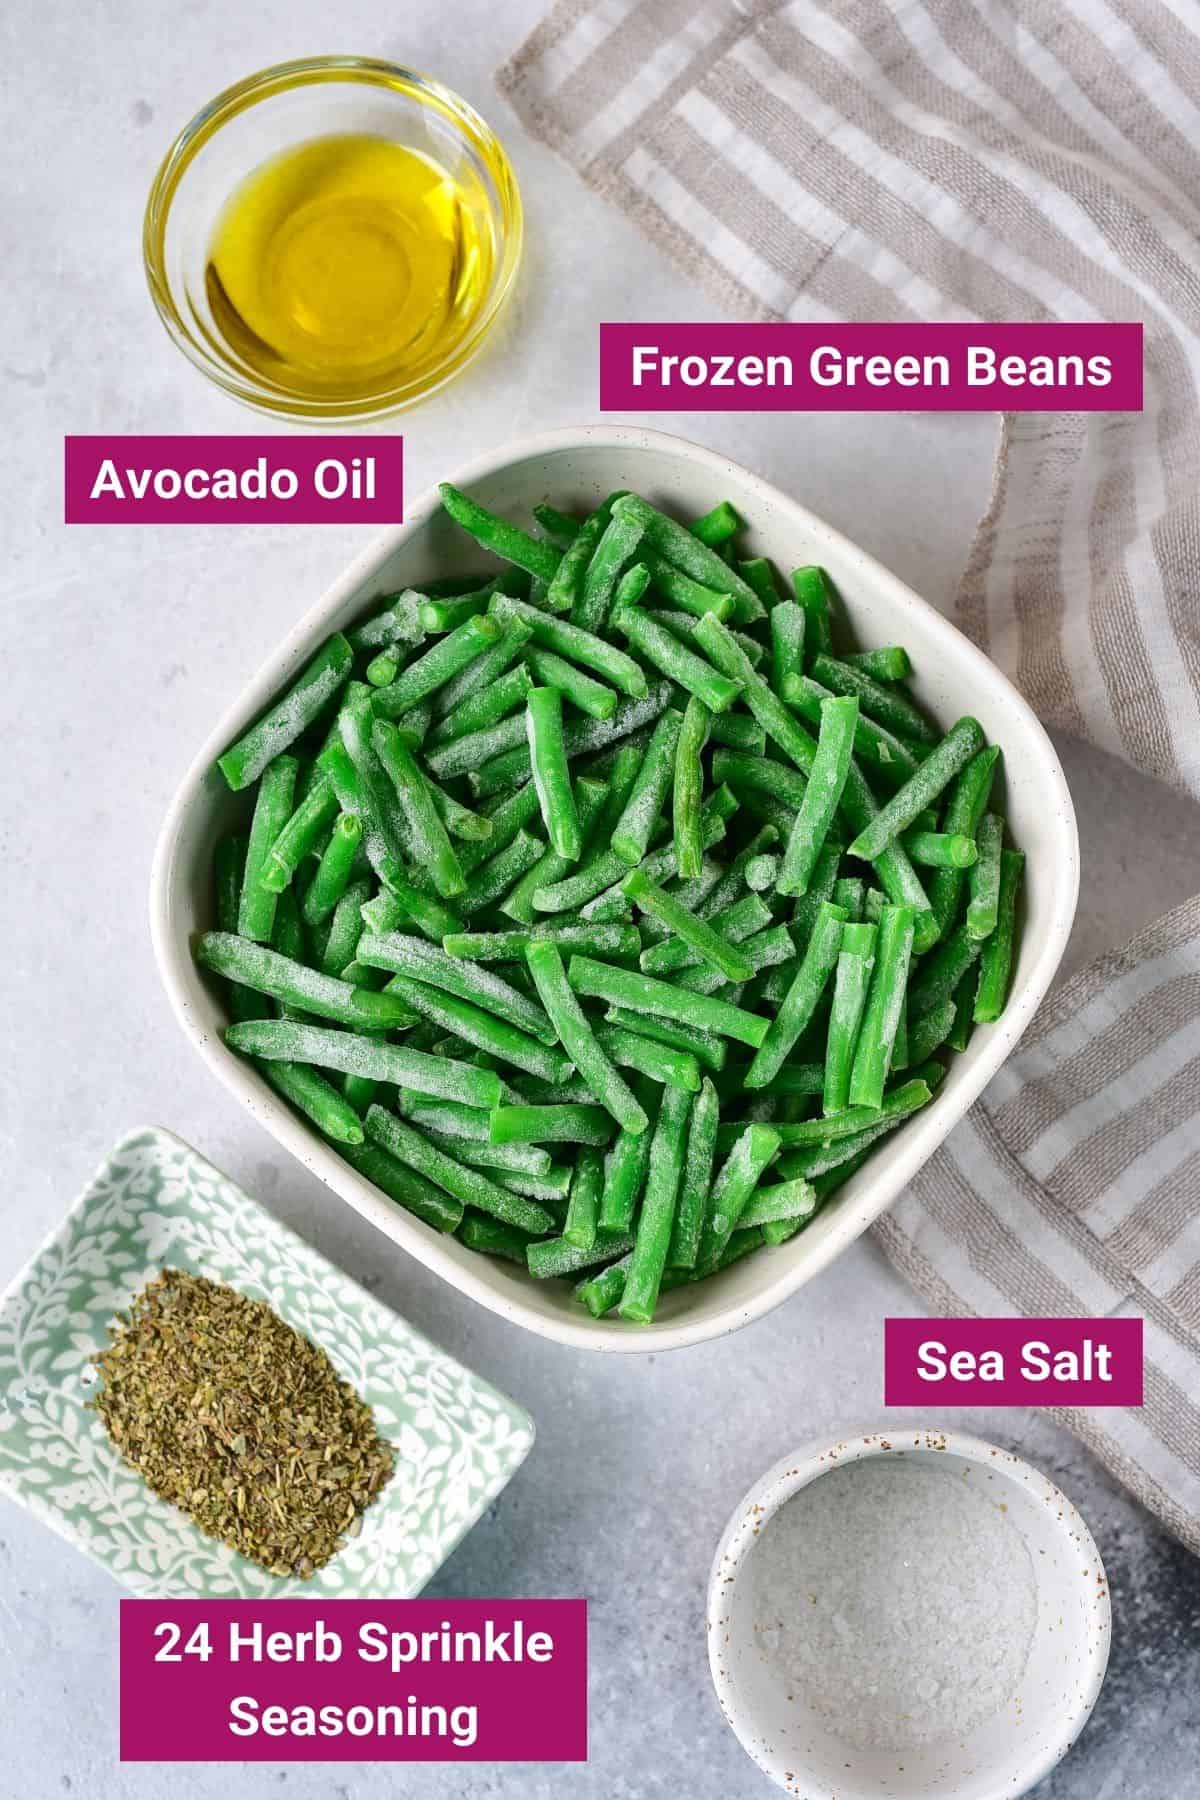 ingredients needed to make air fryer frozen green beans: frozen green beans, avocado oil, sea salt and 24 herb sprinkle seasoning in separate bowls